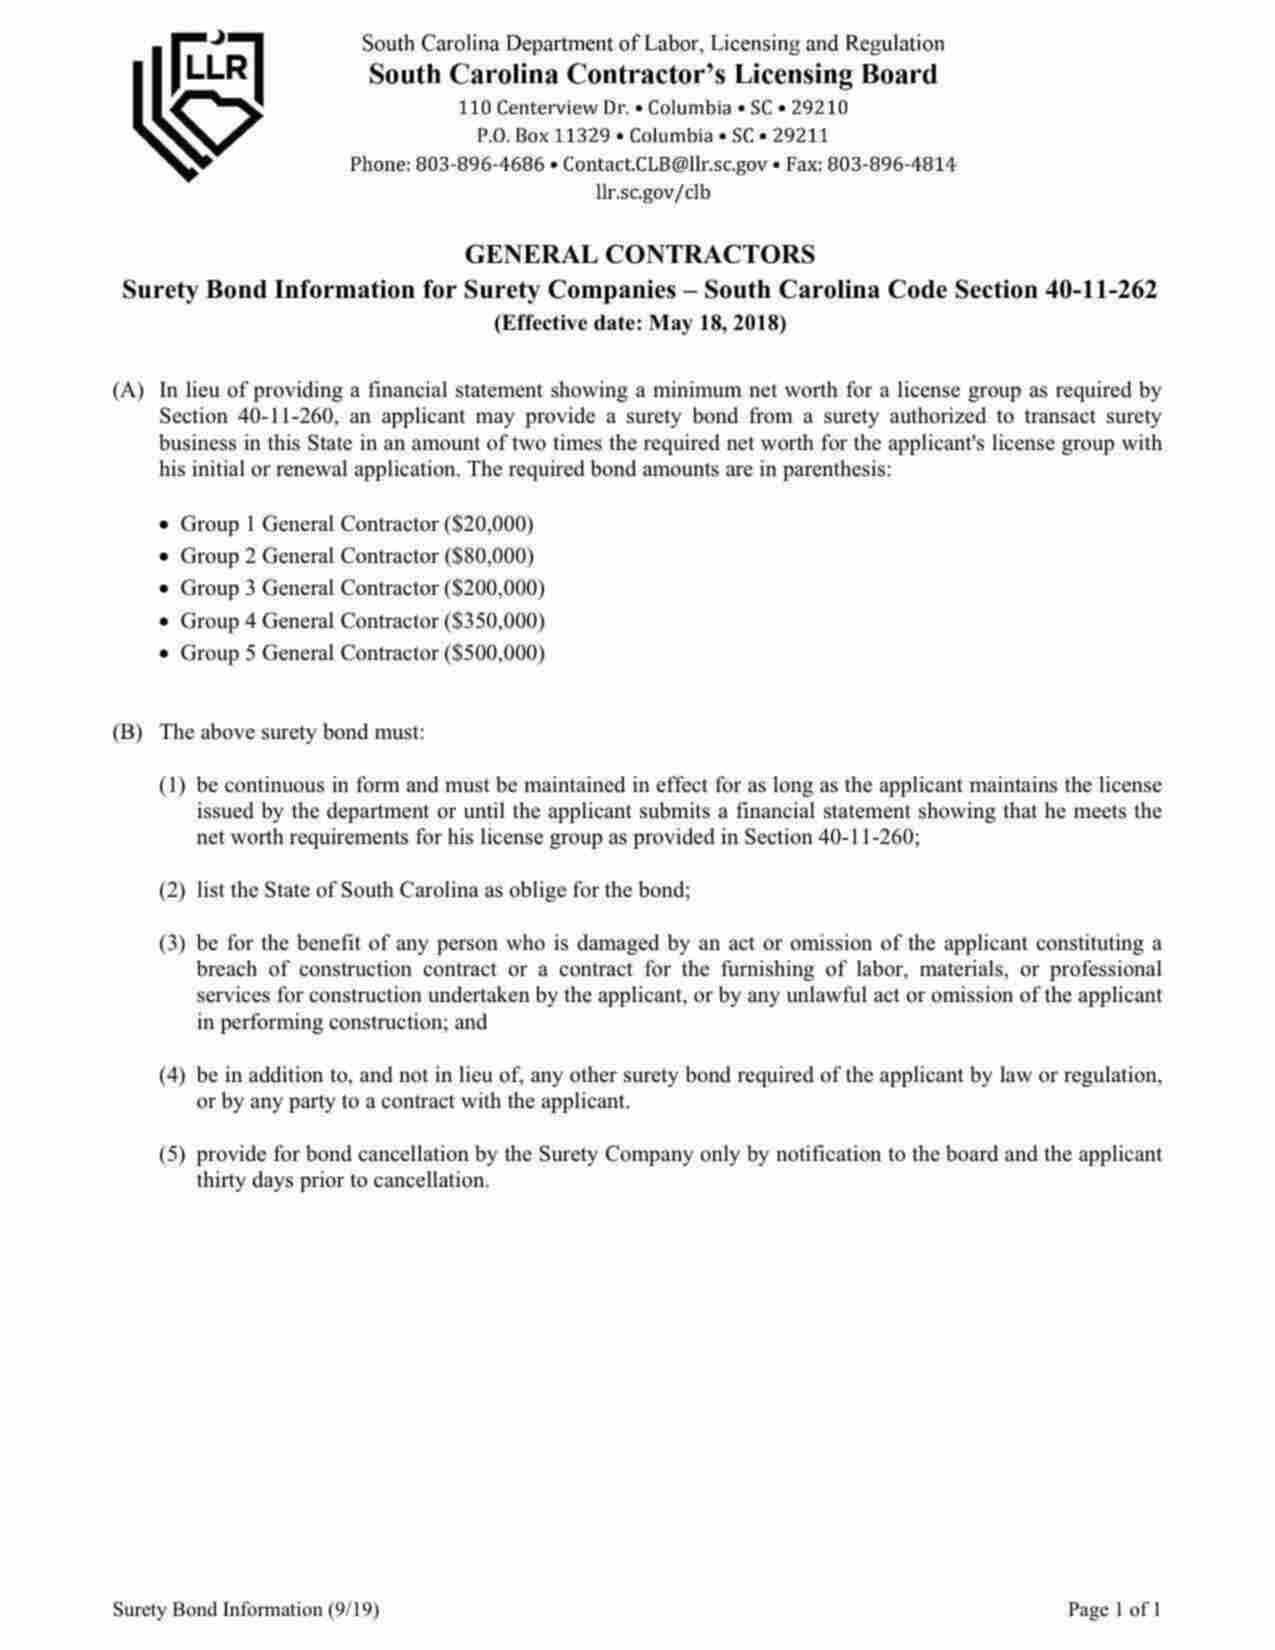 South Carolina General Contractor (Group 1) Bond Form